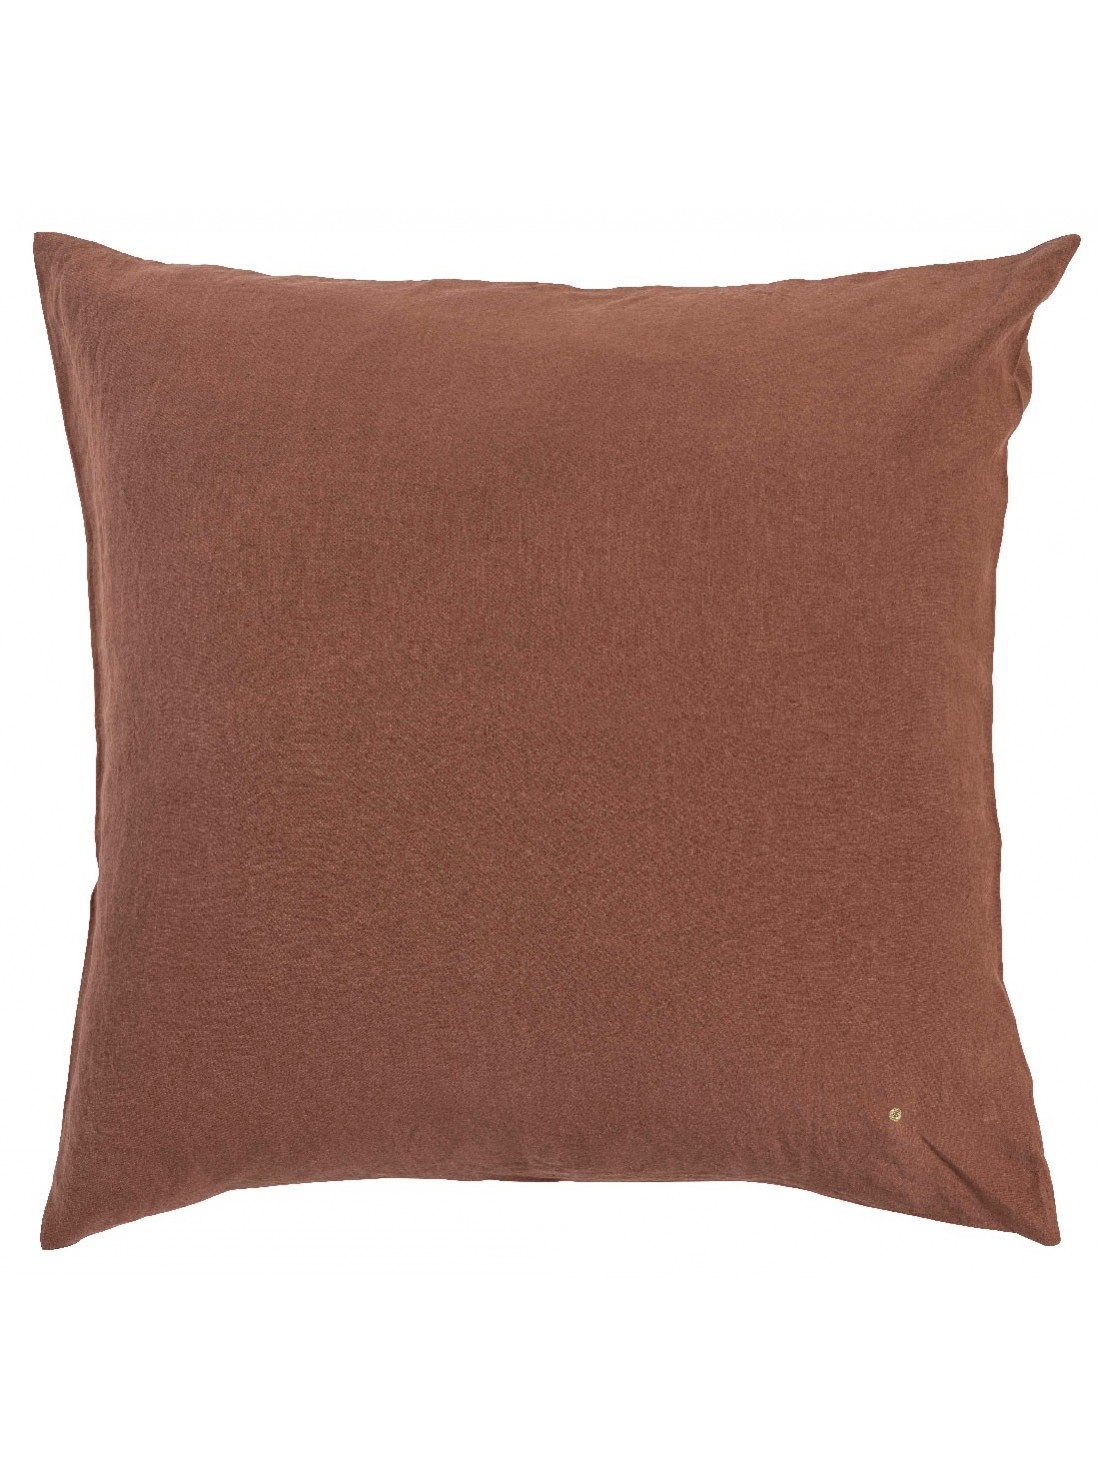 Cushion cover hempMona rhubarbe 80